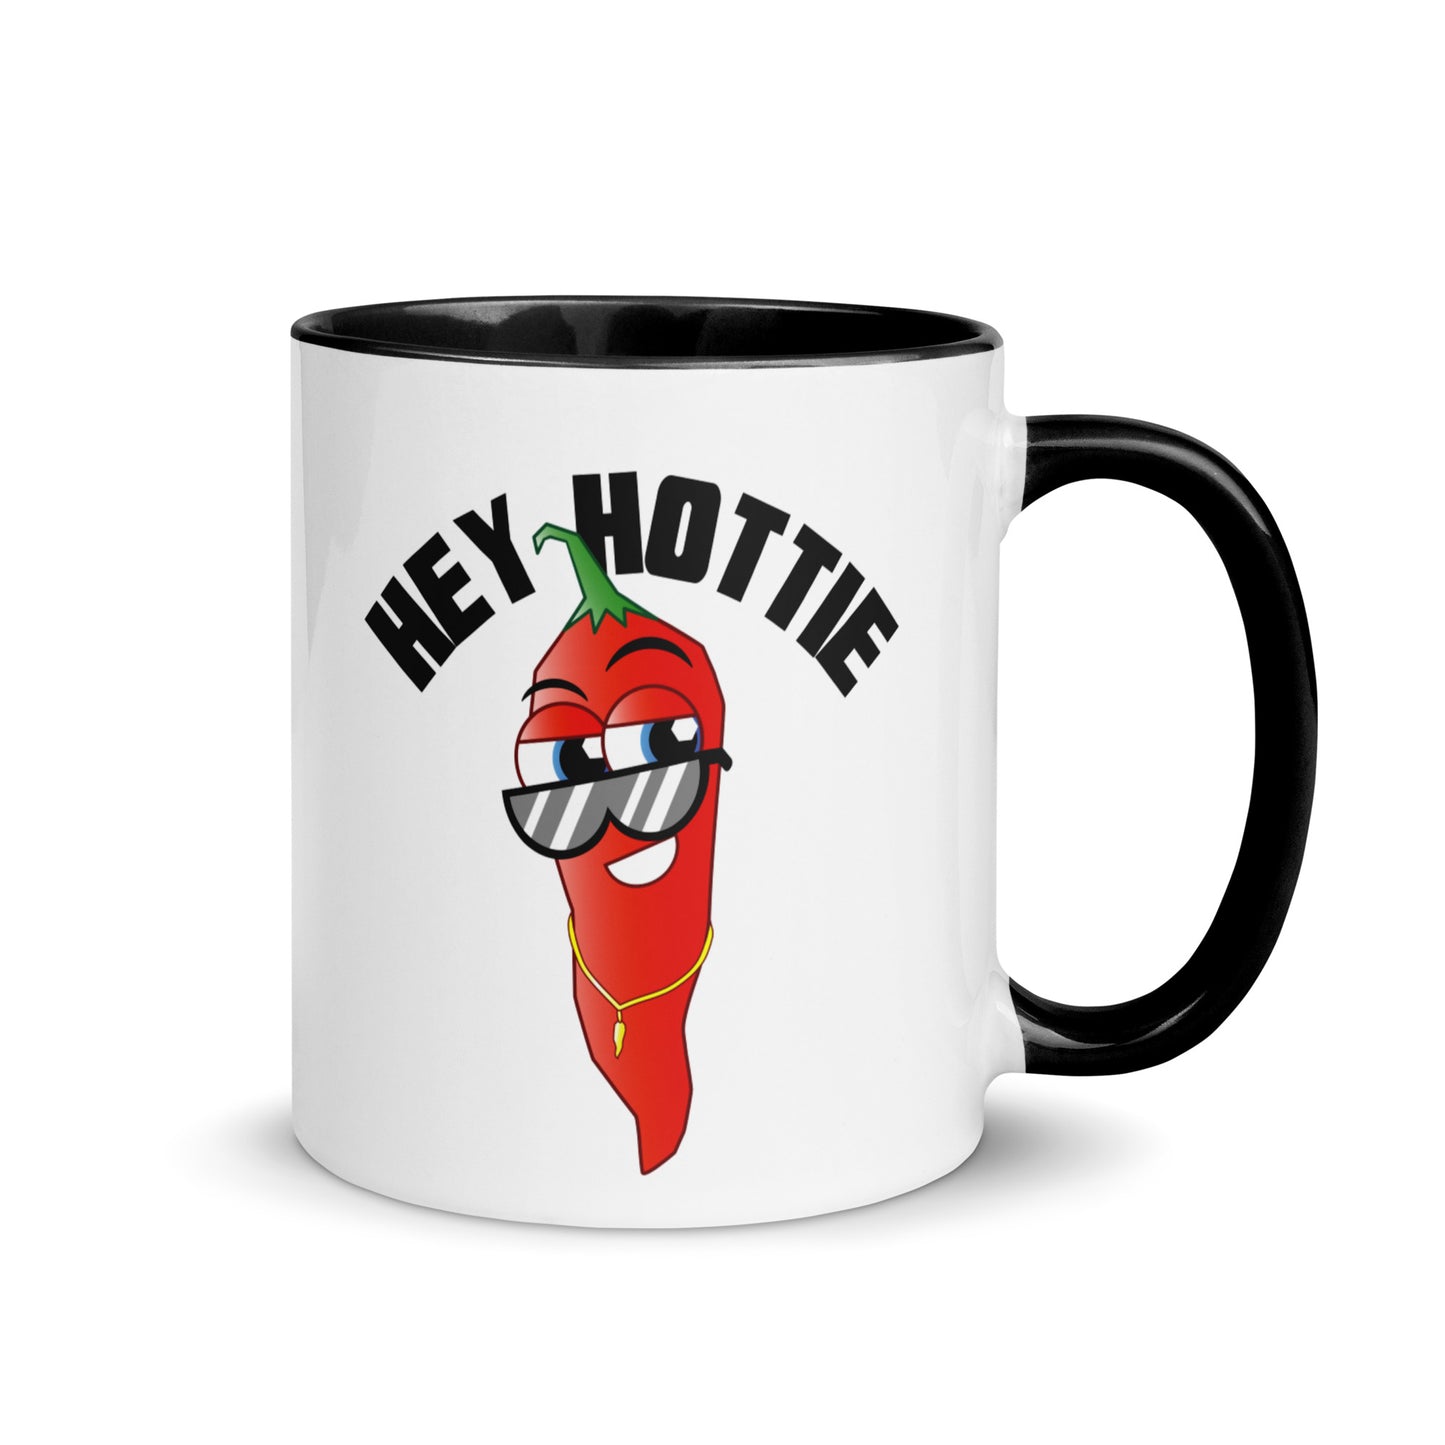 Hey Hottie Coffee Mug